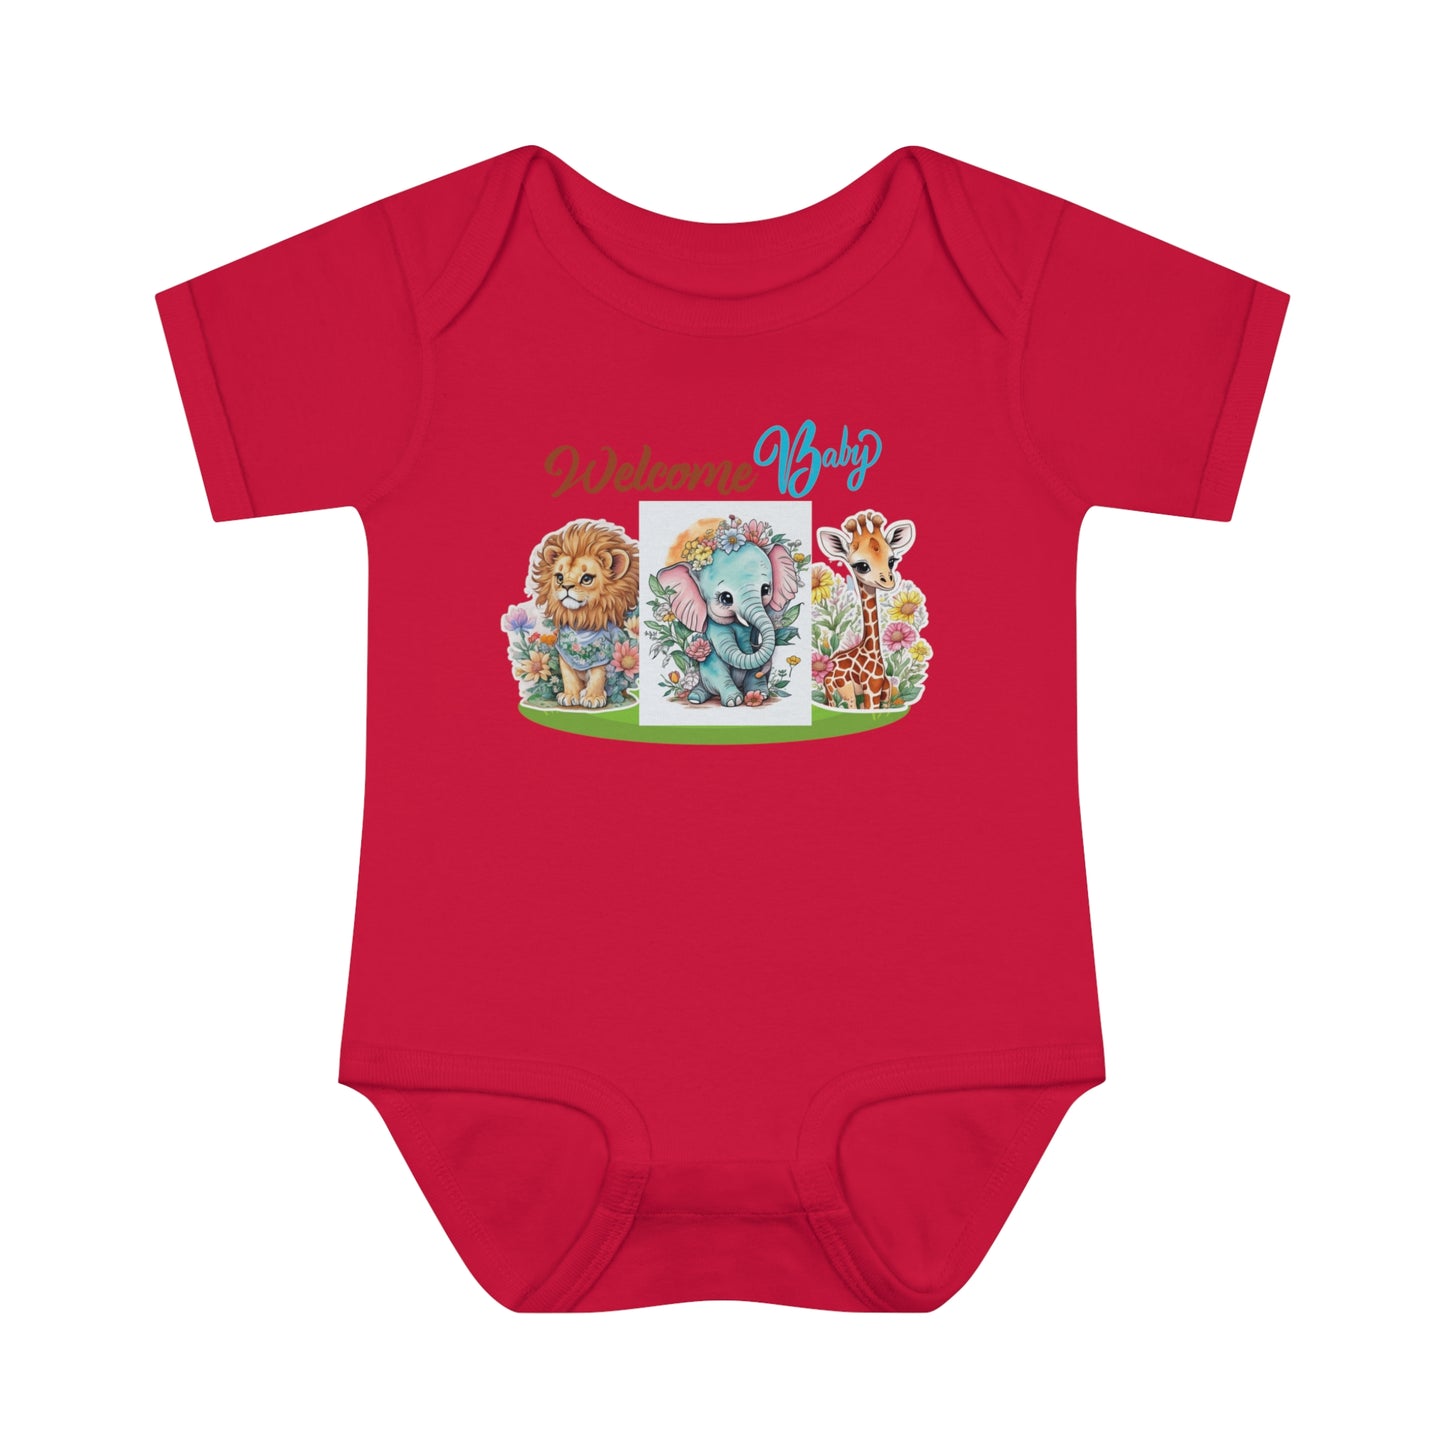 Infant Baby Rib Bodysuit - Welcome Baby - 06